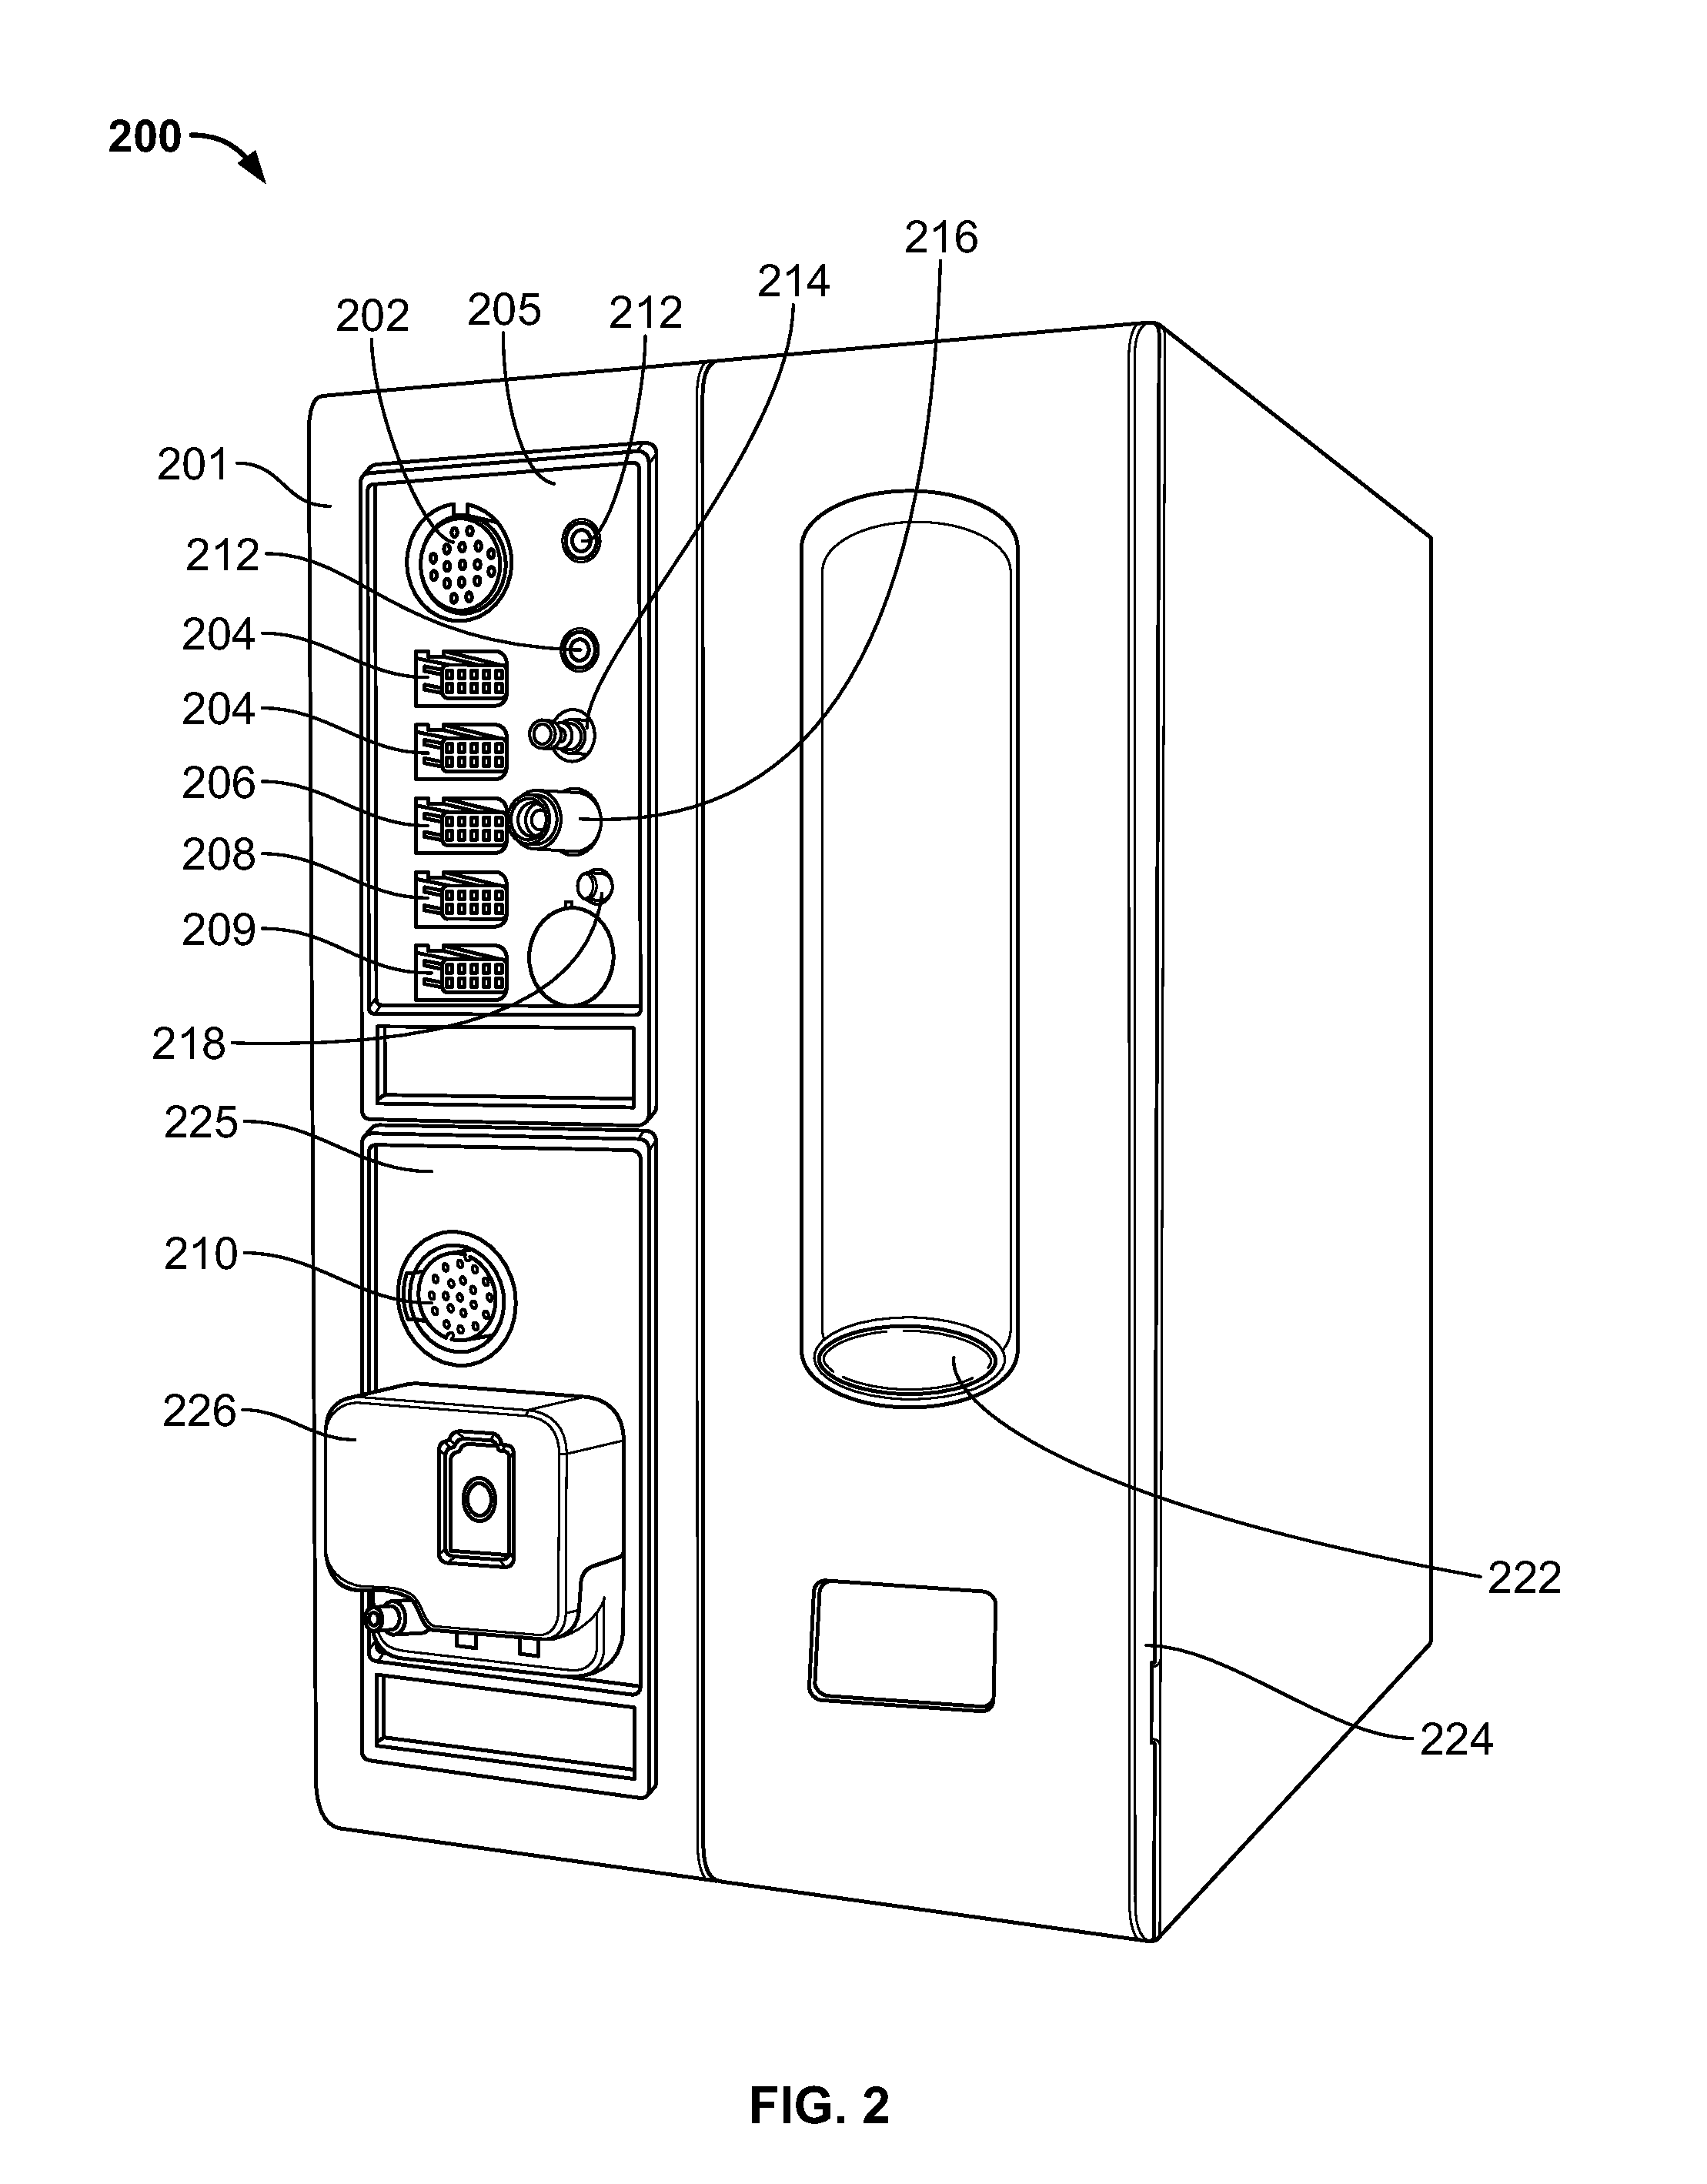 Multi-Display Bedside Monitoring System